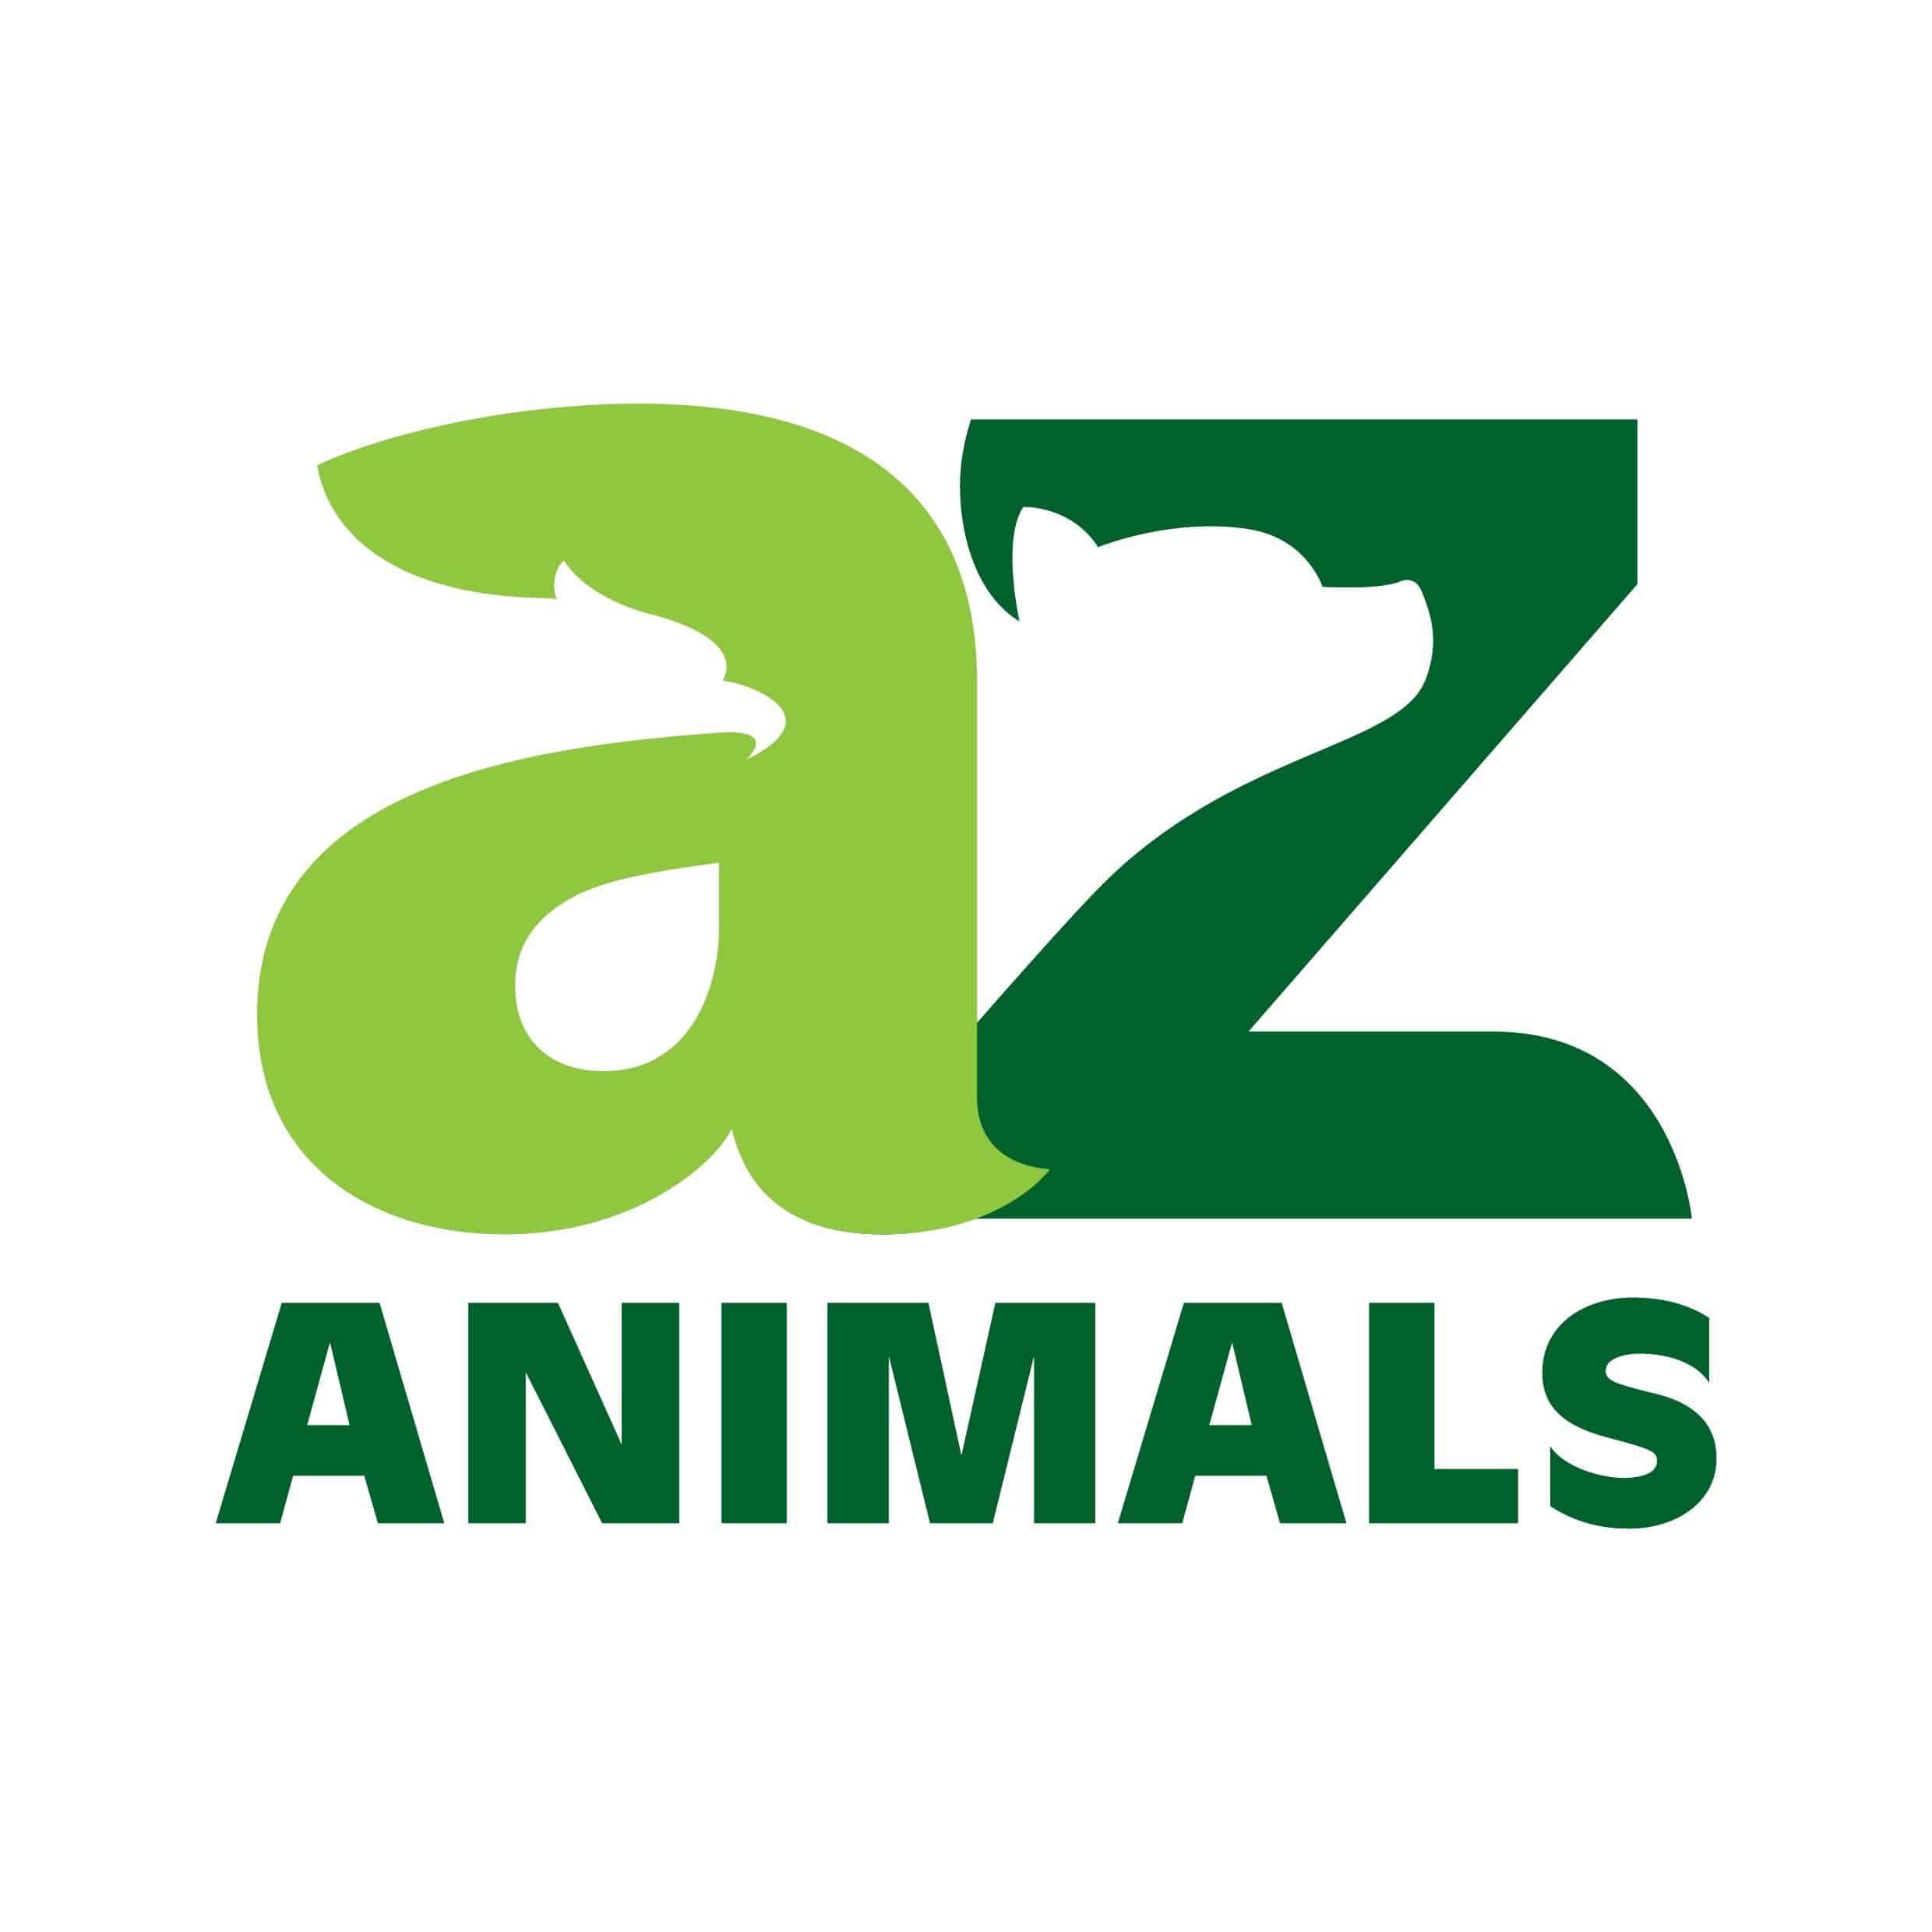 All Animals A-Z List - Animal Names | AZ Animals